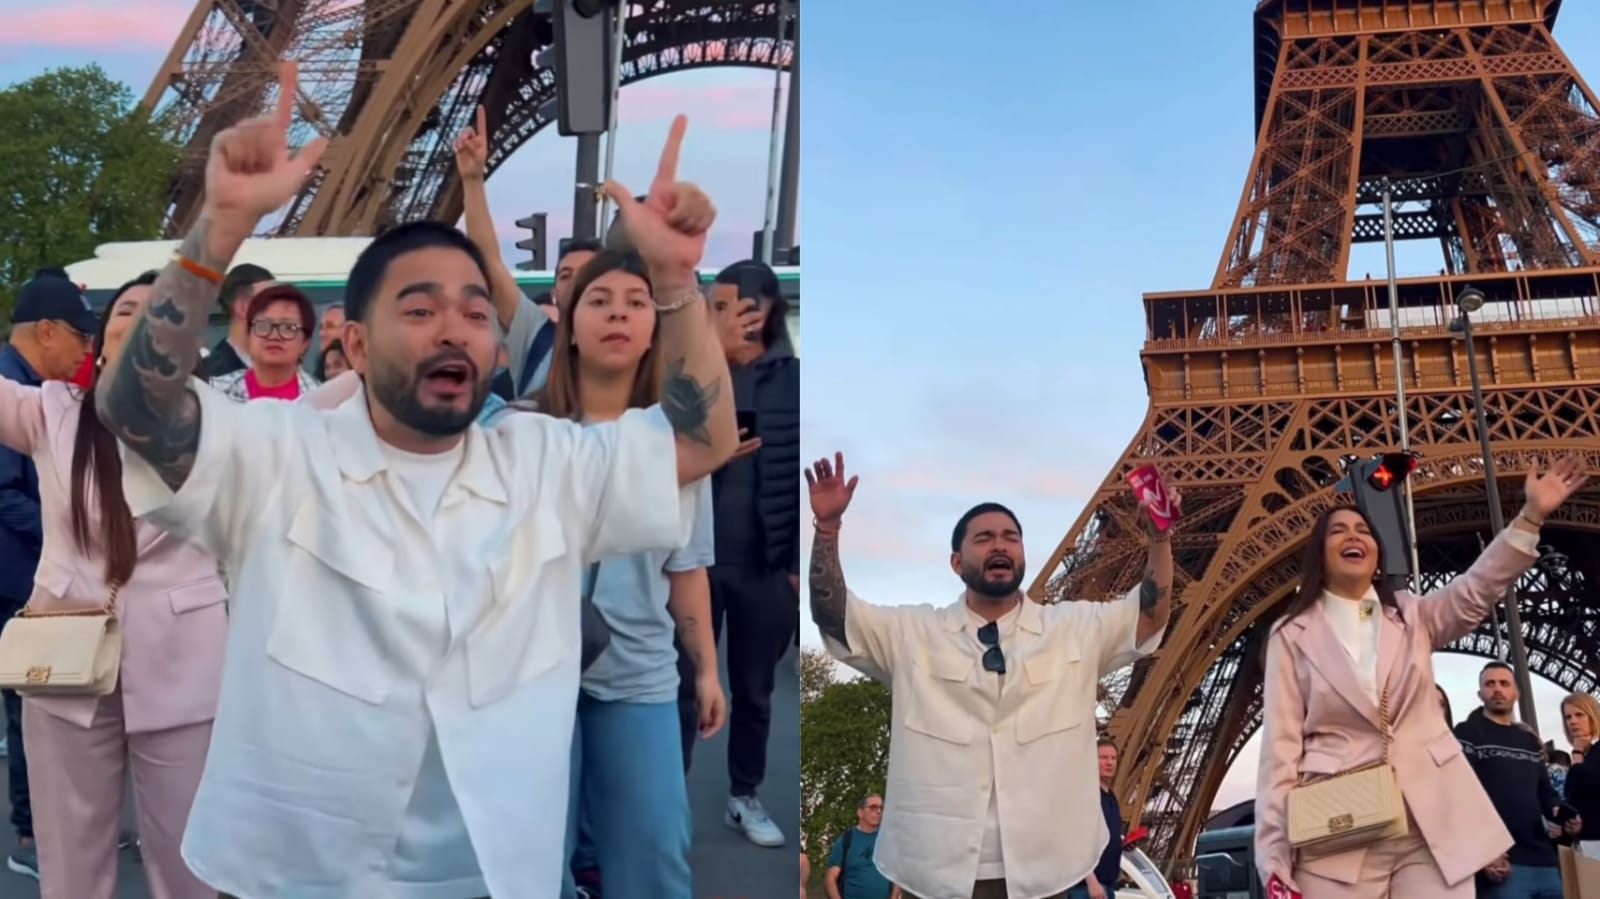 Yudi evangeliza em frente à Torre Eiffel em Paris: “Jesus vive”